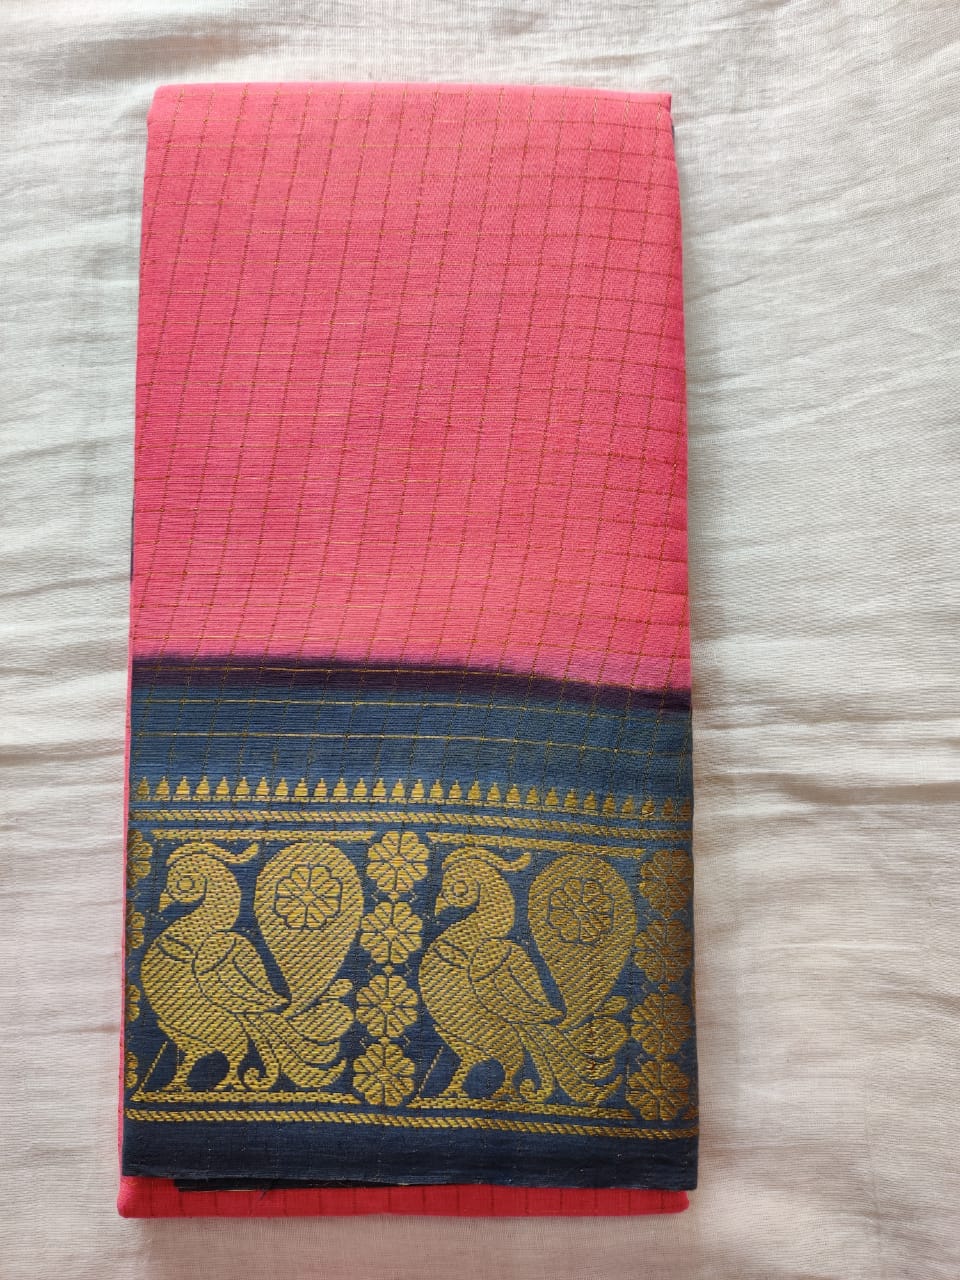 Rose Pink with Grey Peacock Motif Border Madurai Sungudi Saree- Double Side Jari Border Jari Check